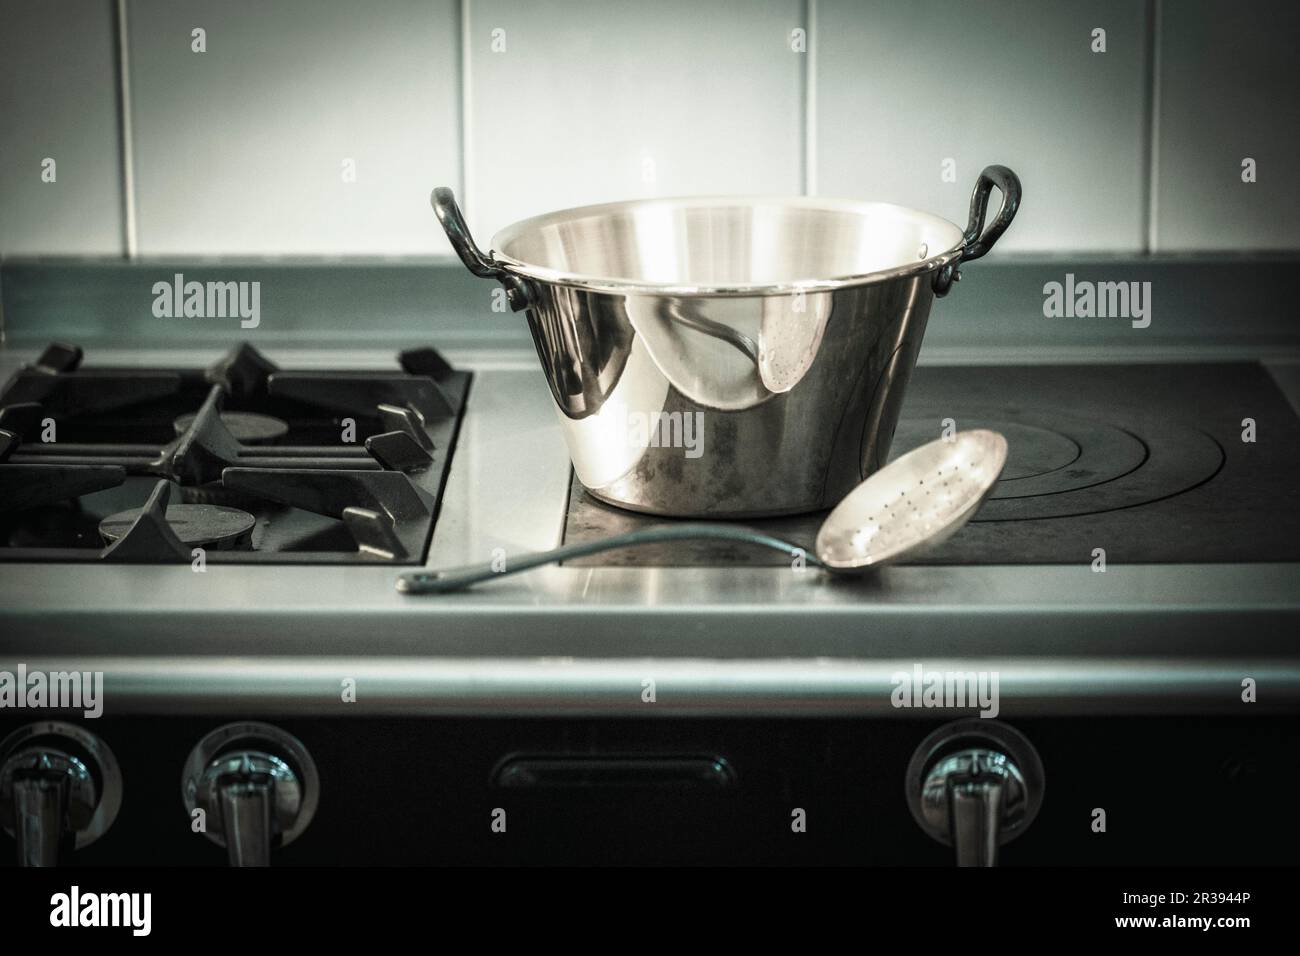 https://c8.alamy.com/comp/2R3944P/an-aluminium-pot-and-a-draining-spoon-on-a-hob-2R3944P.jpg